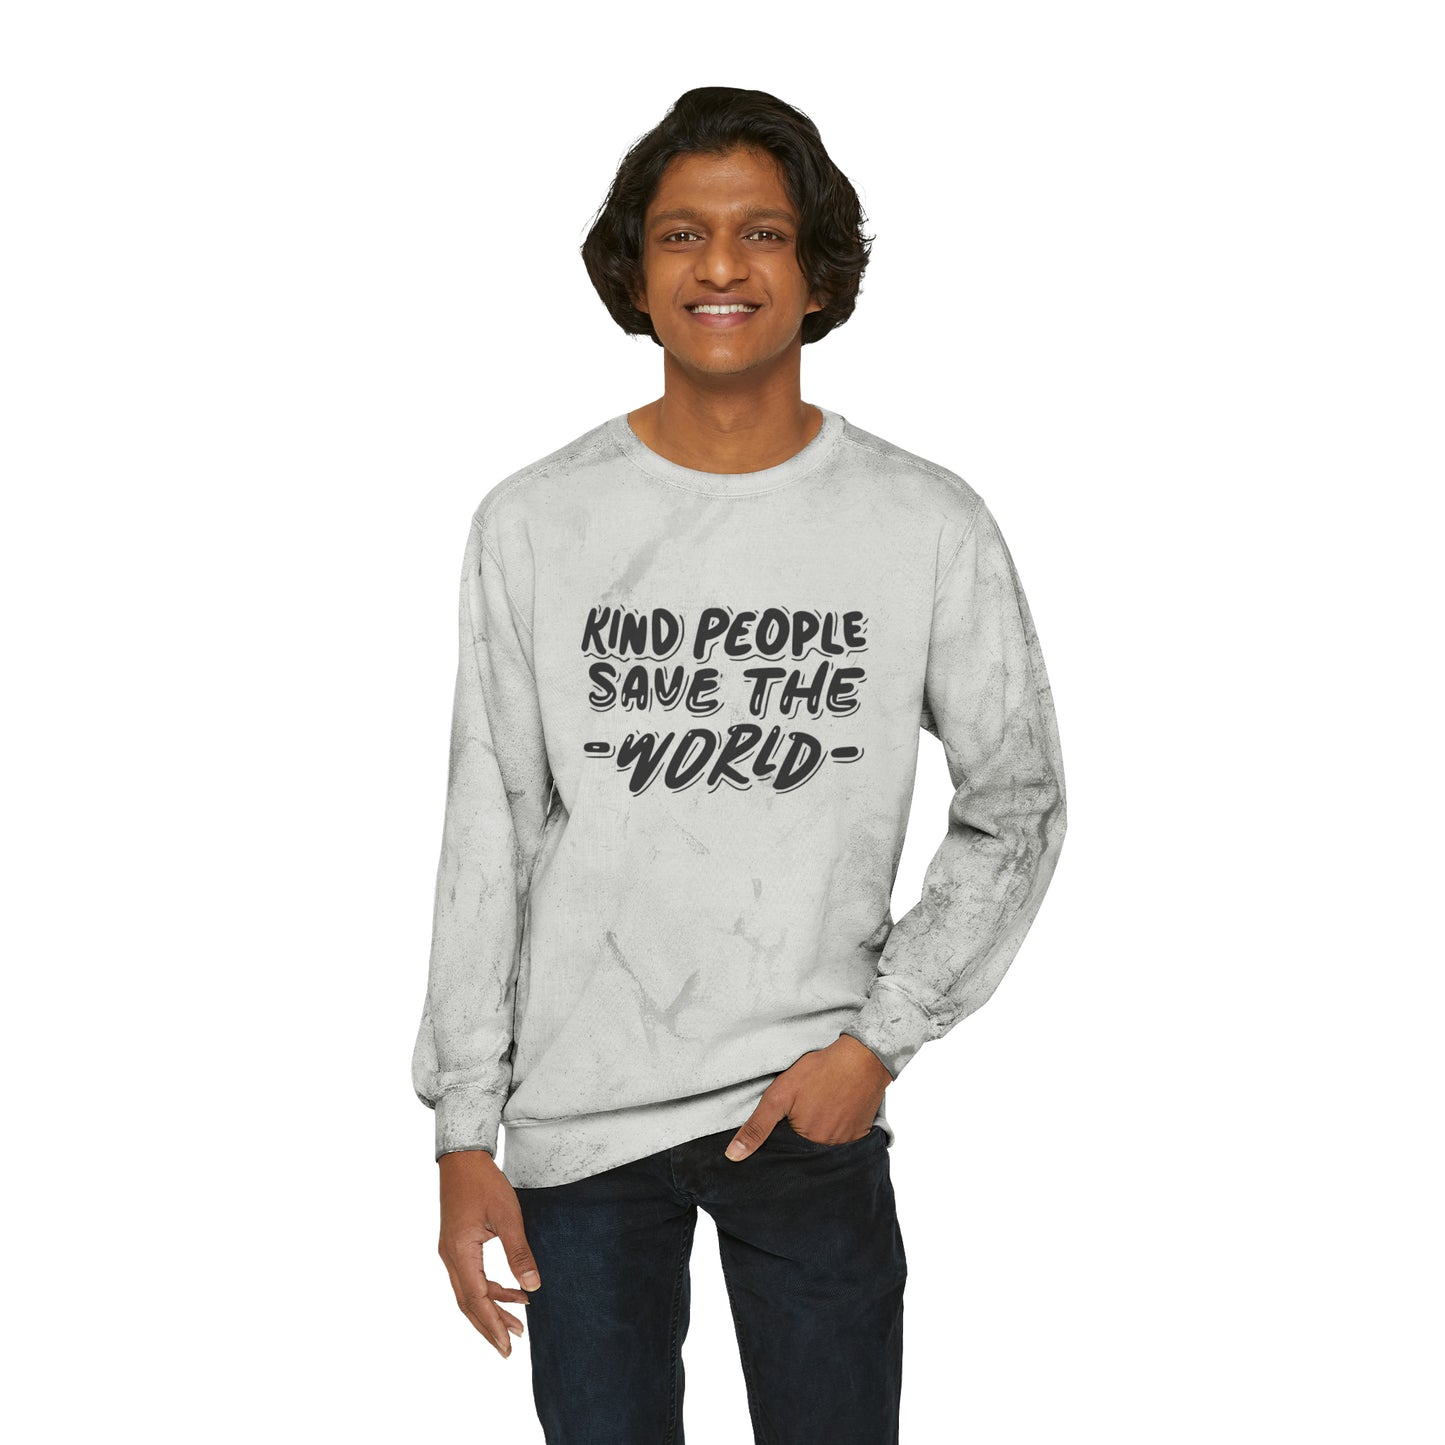 Autism acceptance sweatshirt / "Kind people" quote shirt